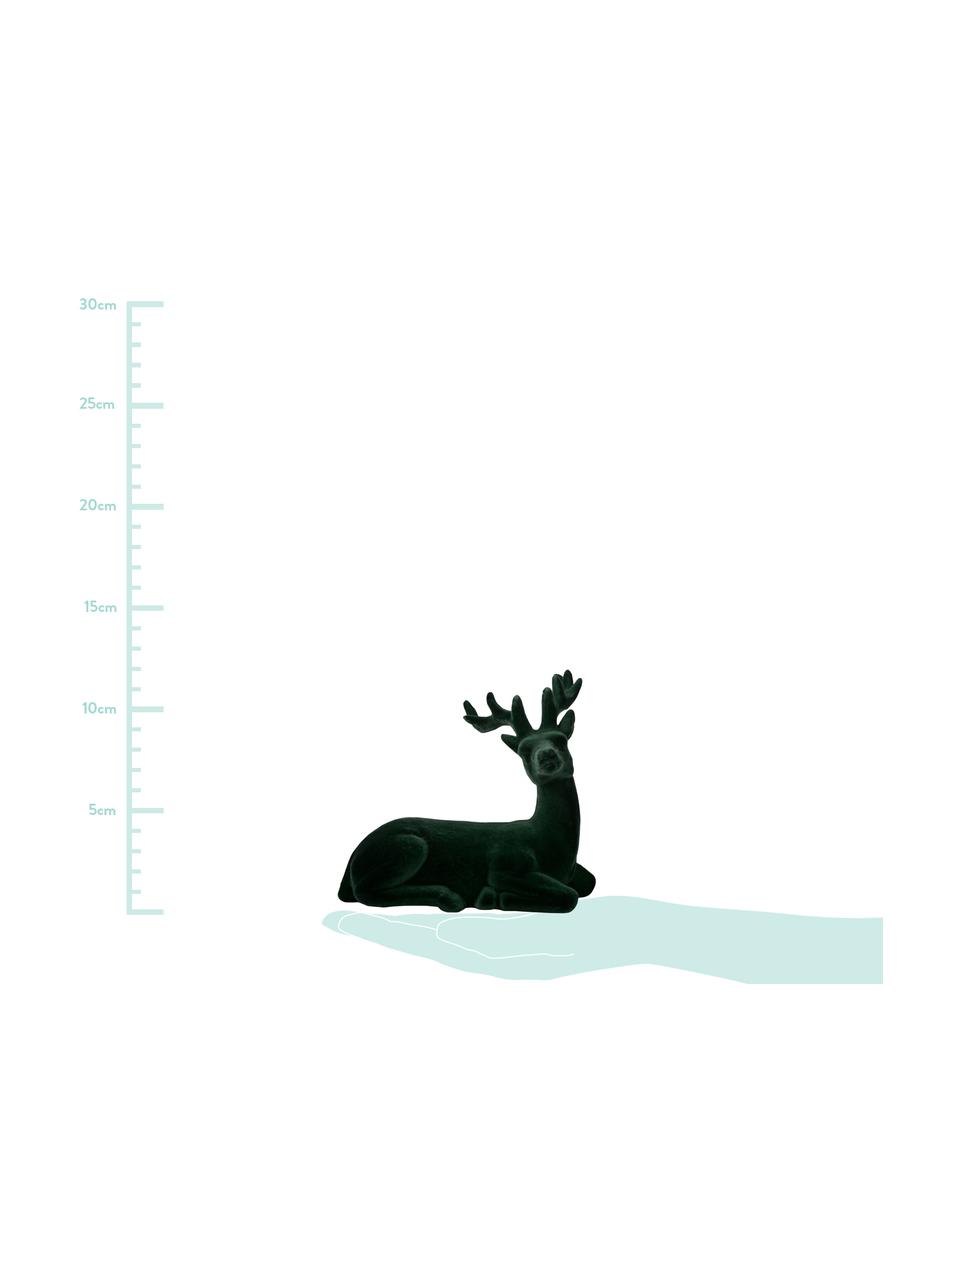 Deko-Objekte-Set Deer, 2-tlg., Samt, Grün, 12 x 12 cm